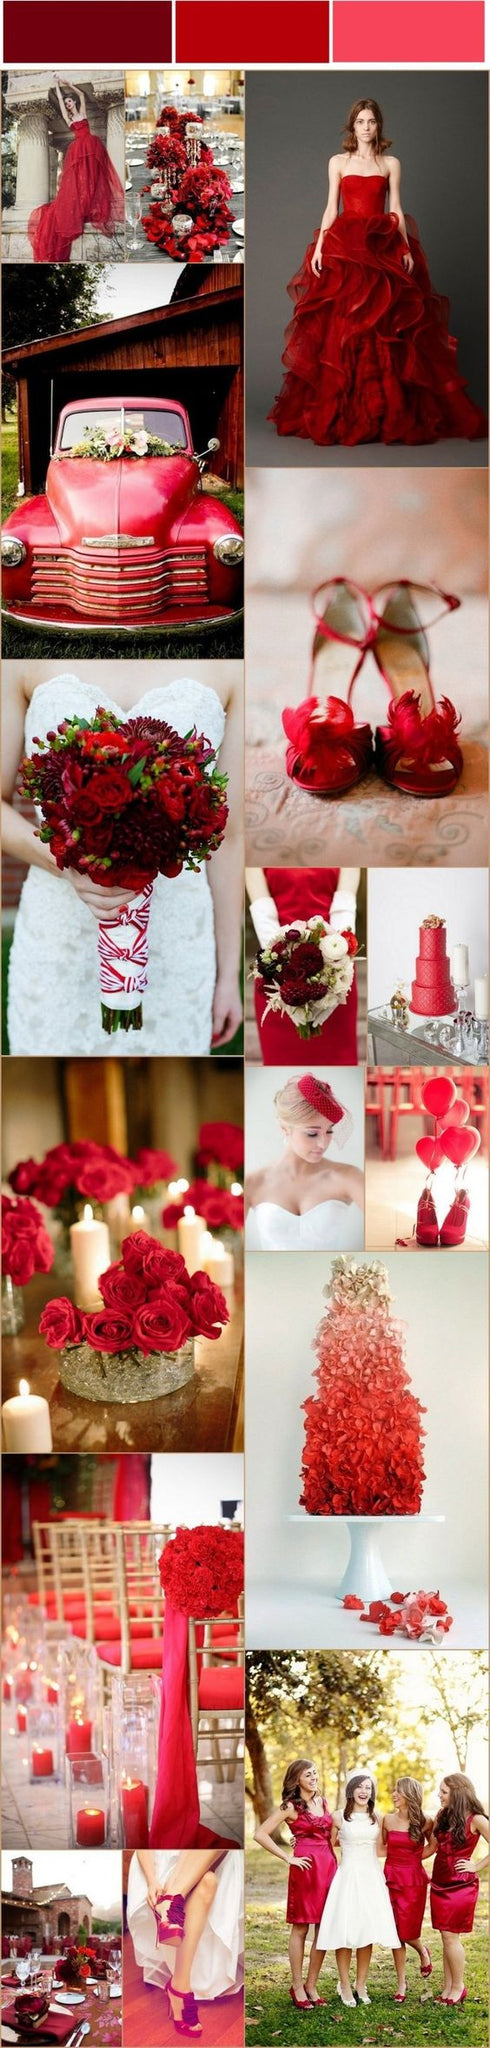 Red wedding inspiration